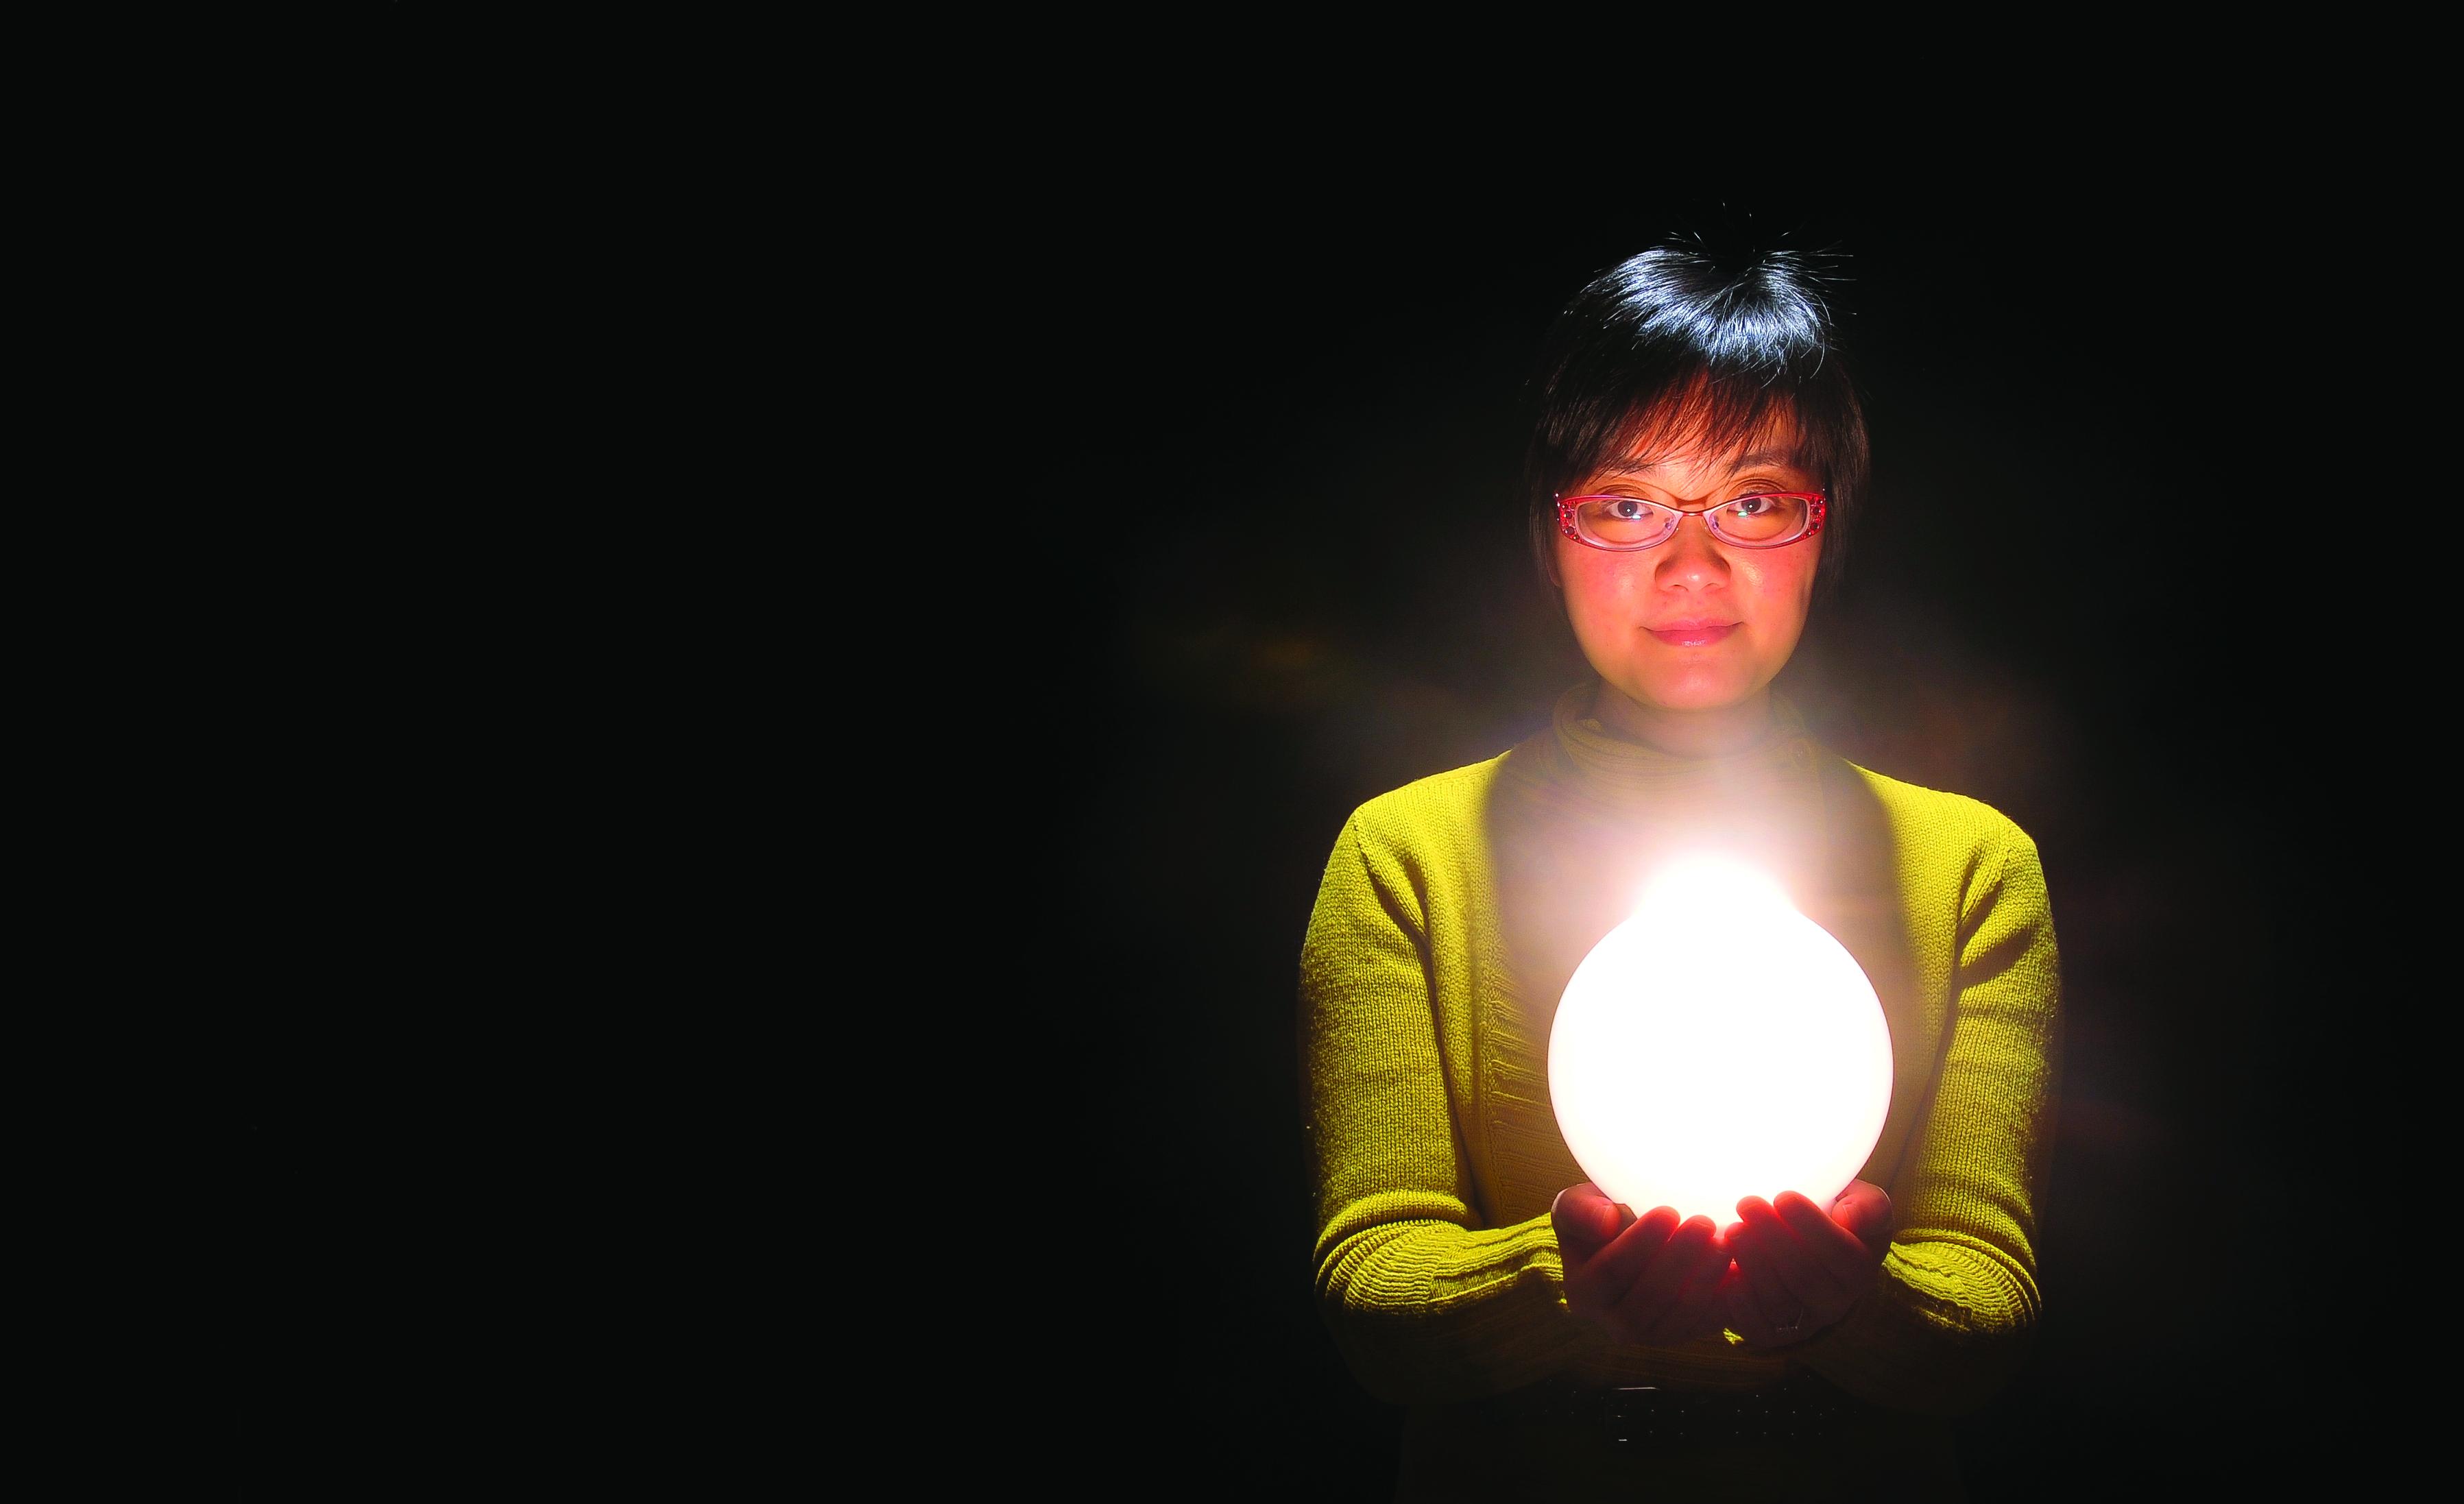 A woman holding a light.